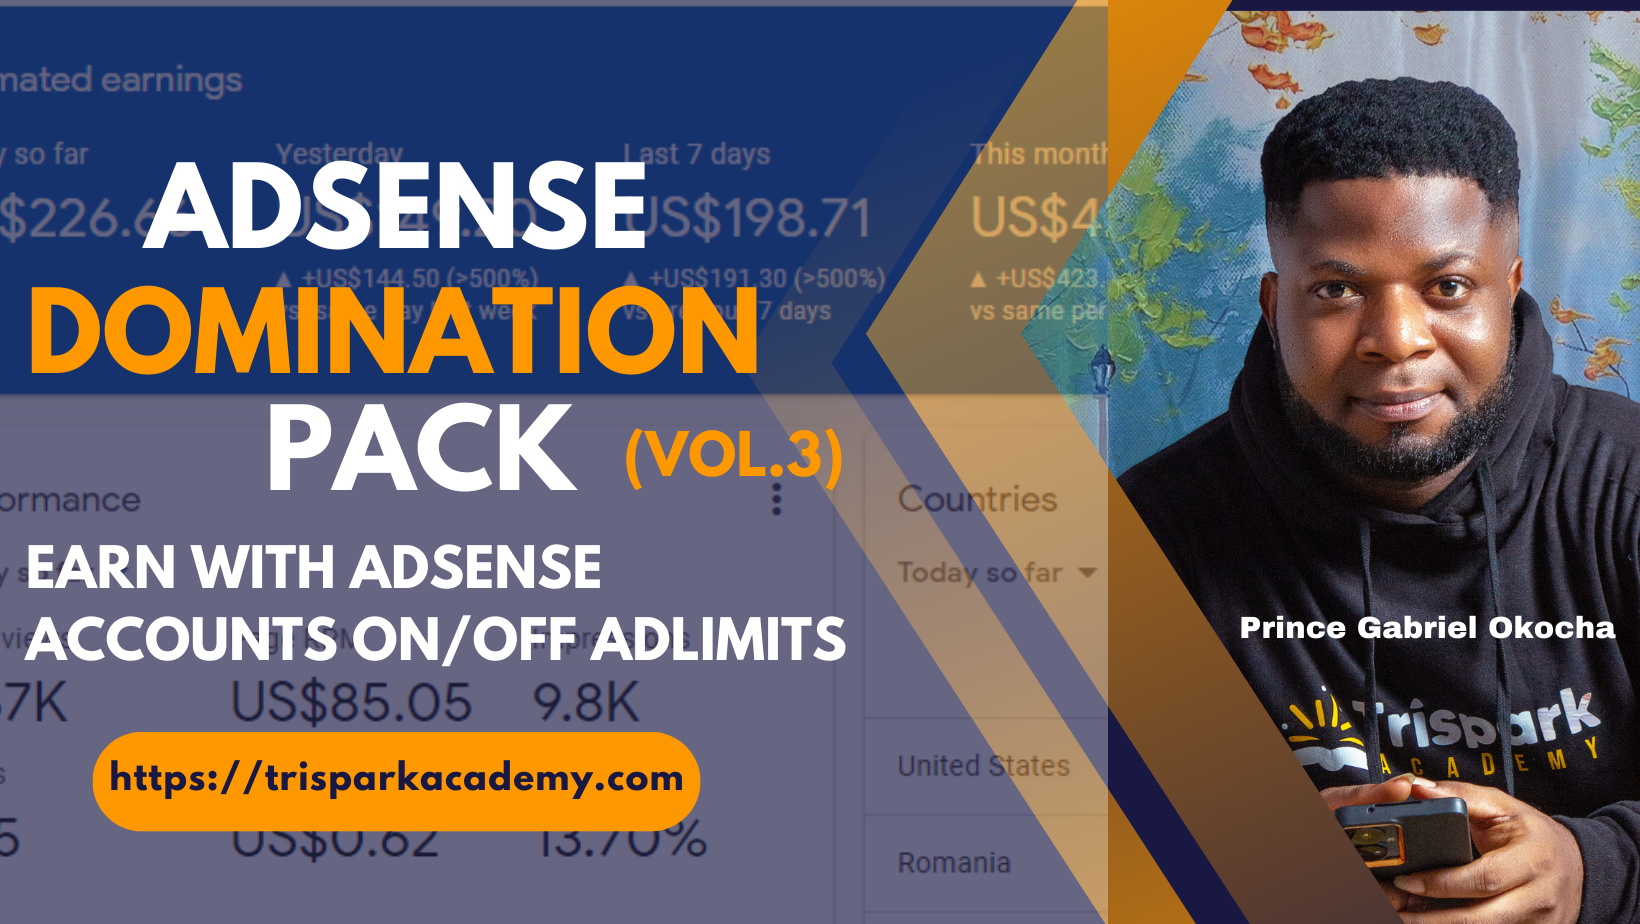 Adsense CPC Domination Pack Vol. 3